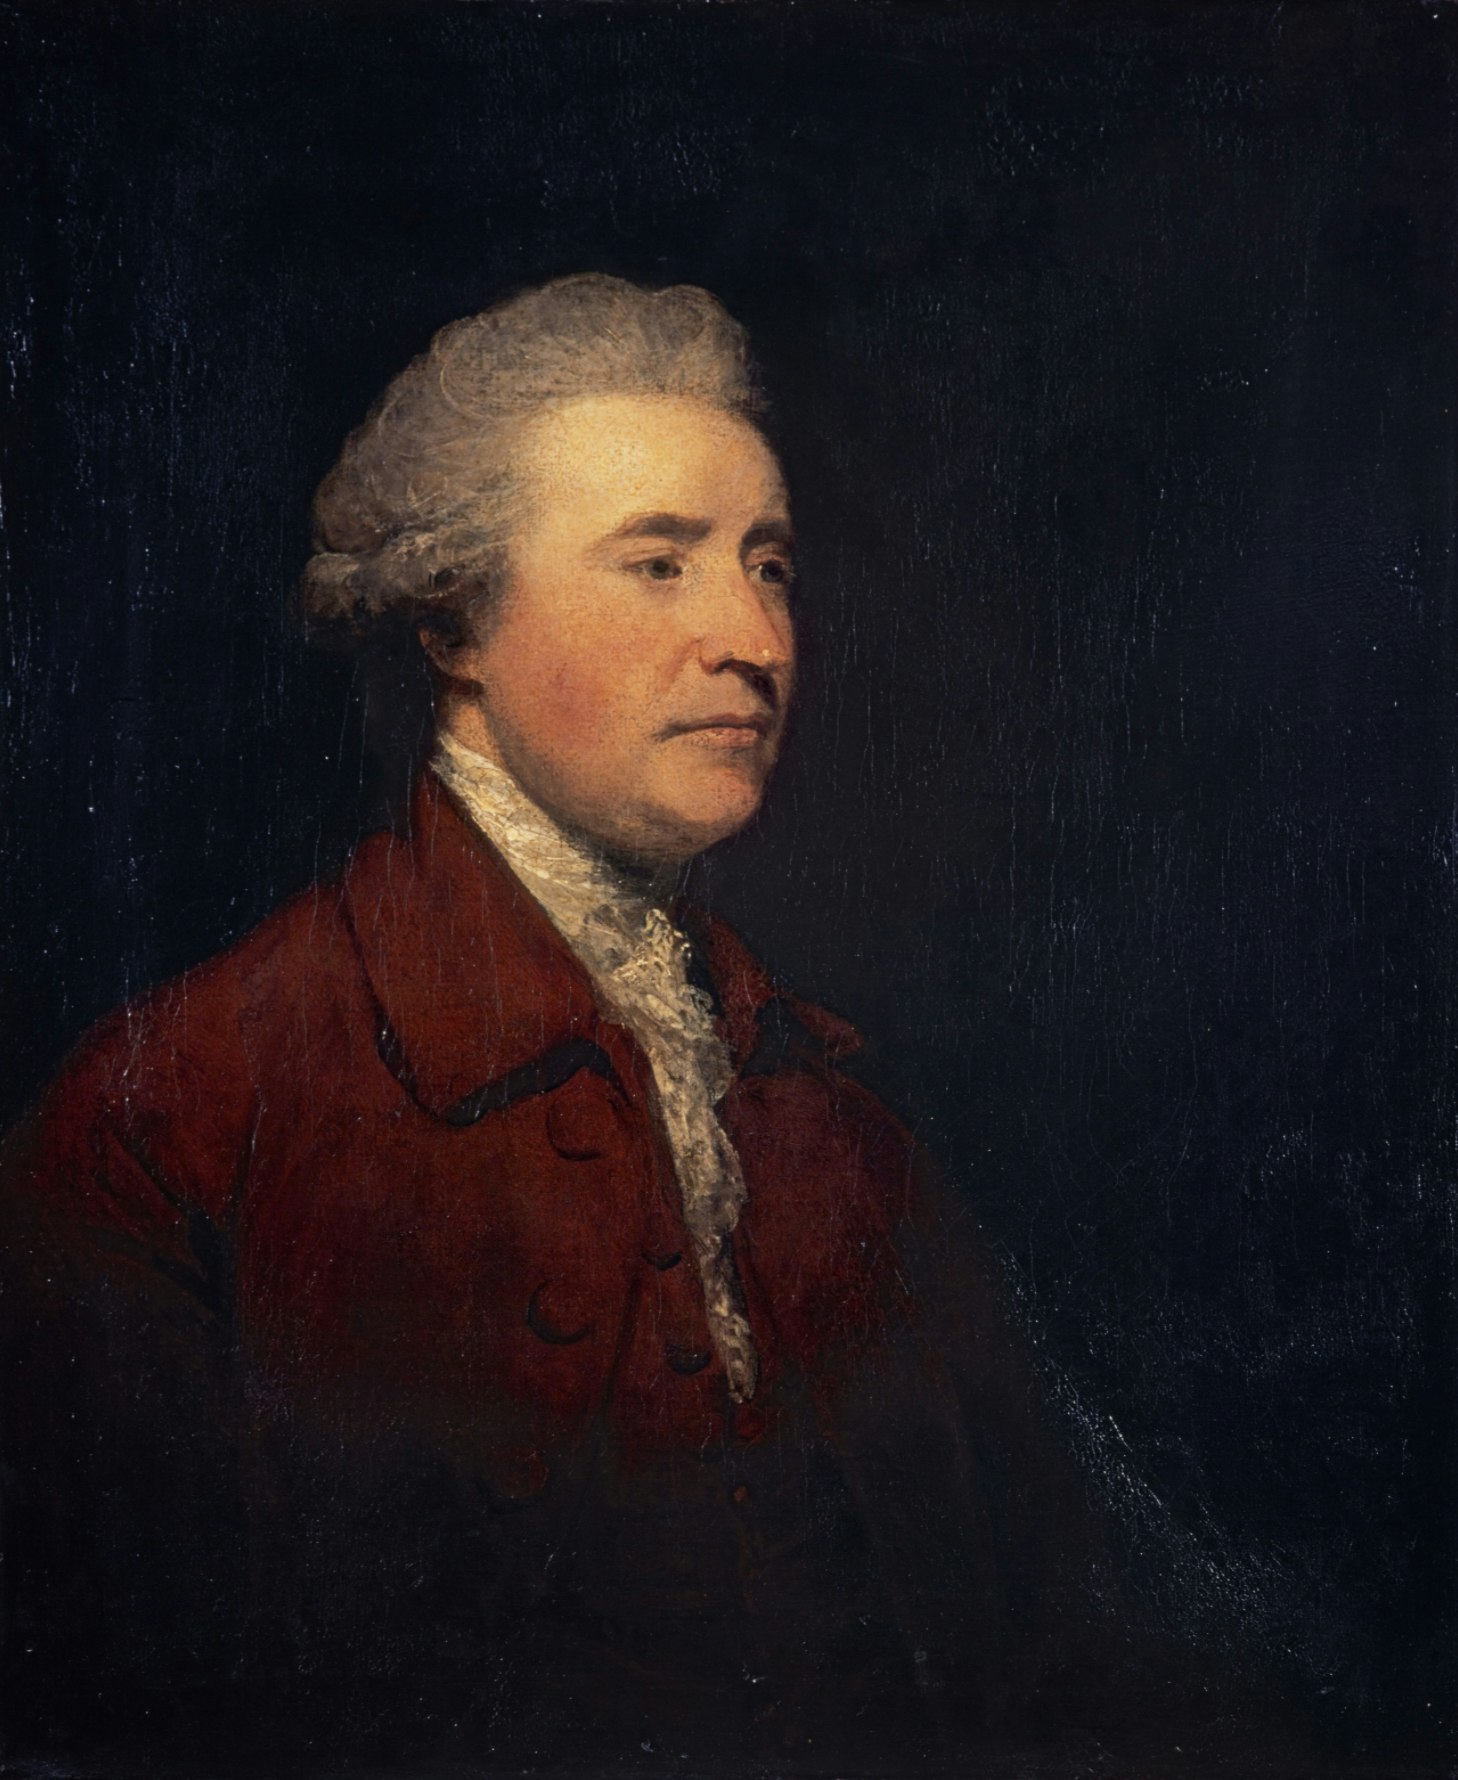 Edmund Burke, 1729 - 1797. Statesman, orator and author.